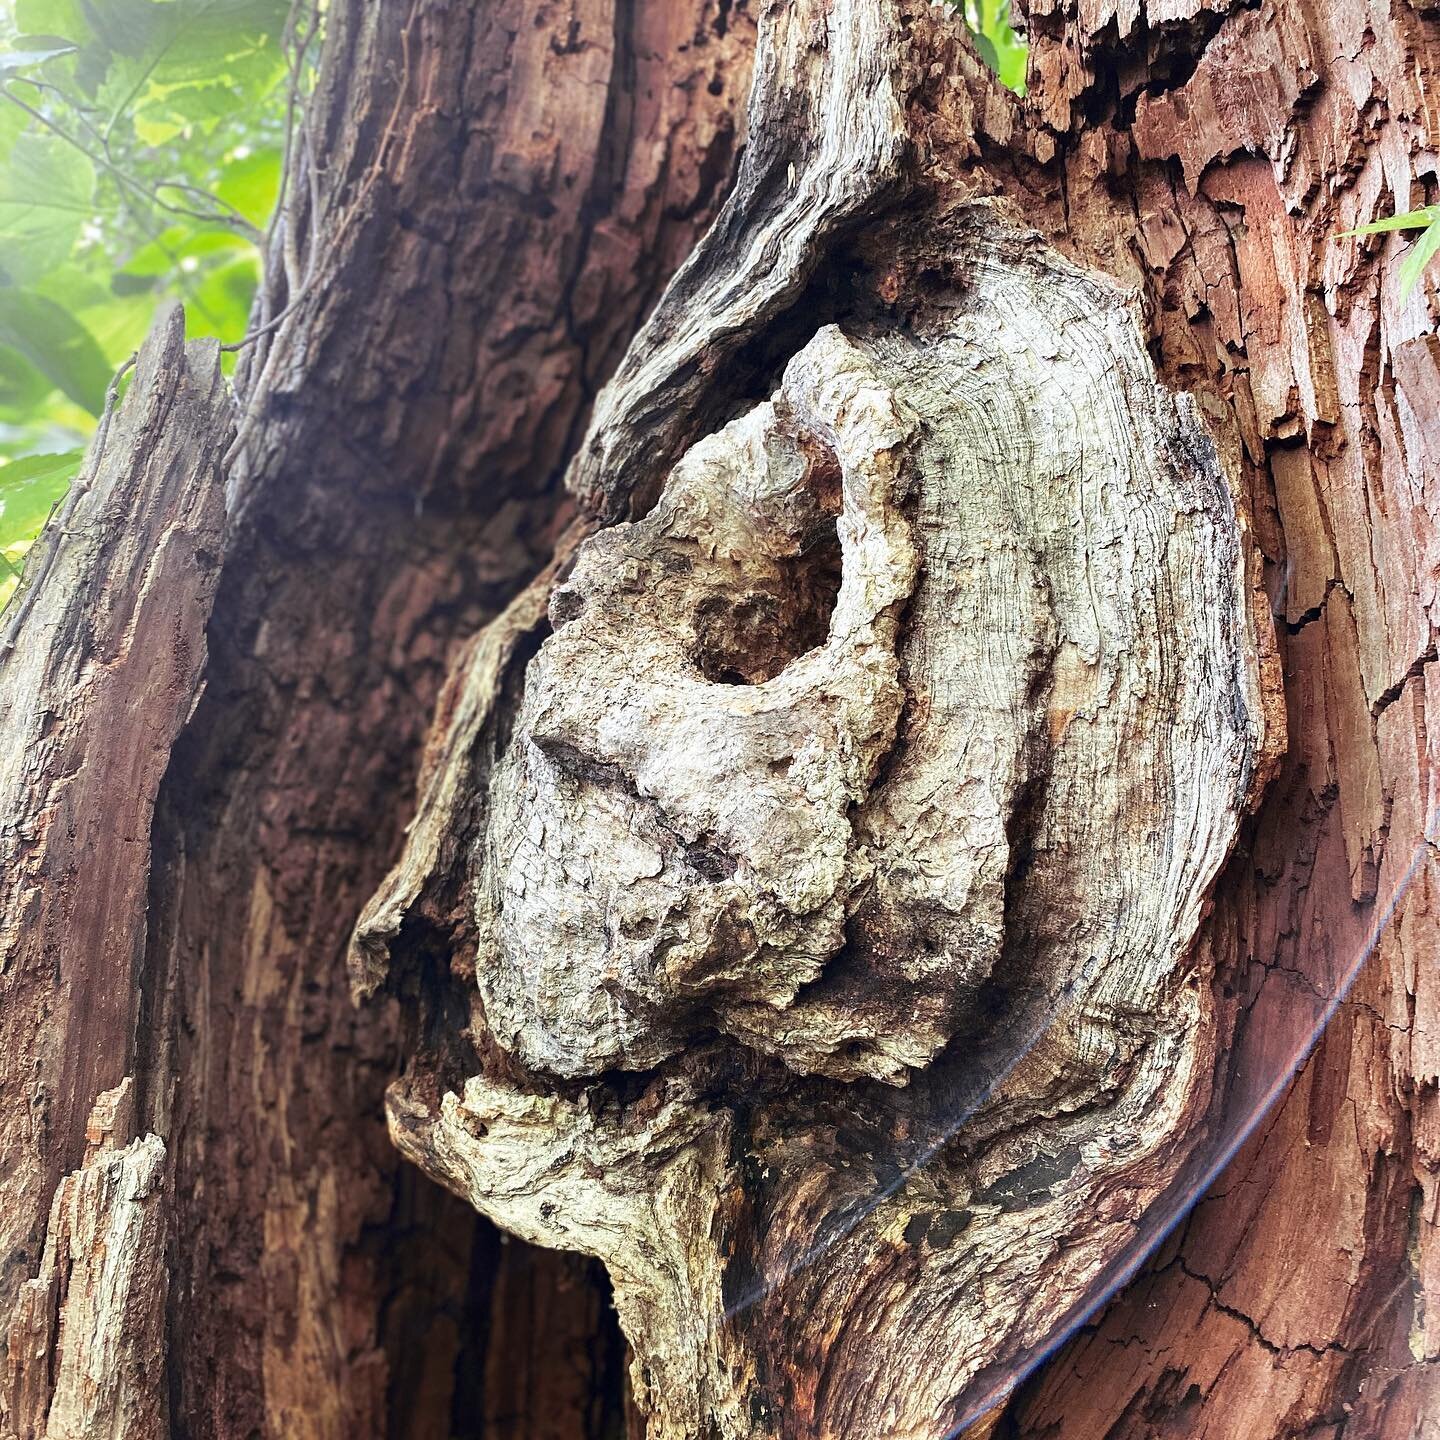 Skull-Similar tree 

At least we can still enjoy walks in the woods!

#skulls #treeface #spirit #naturephotography